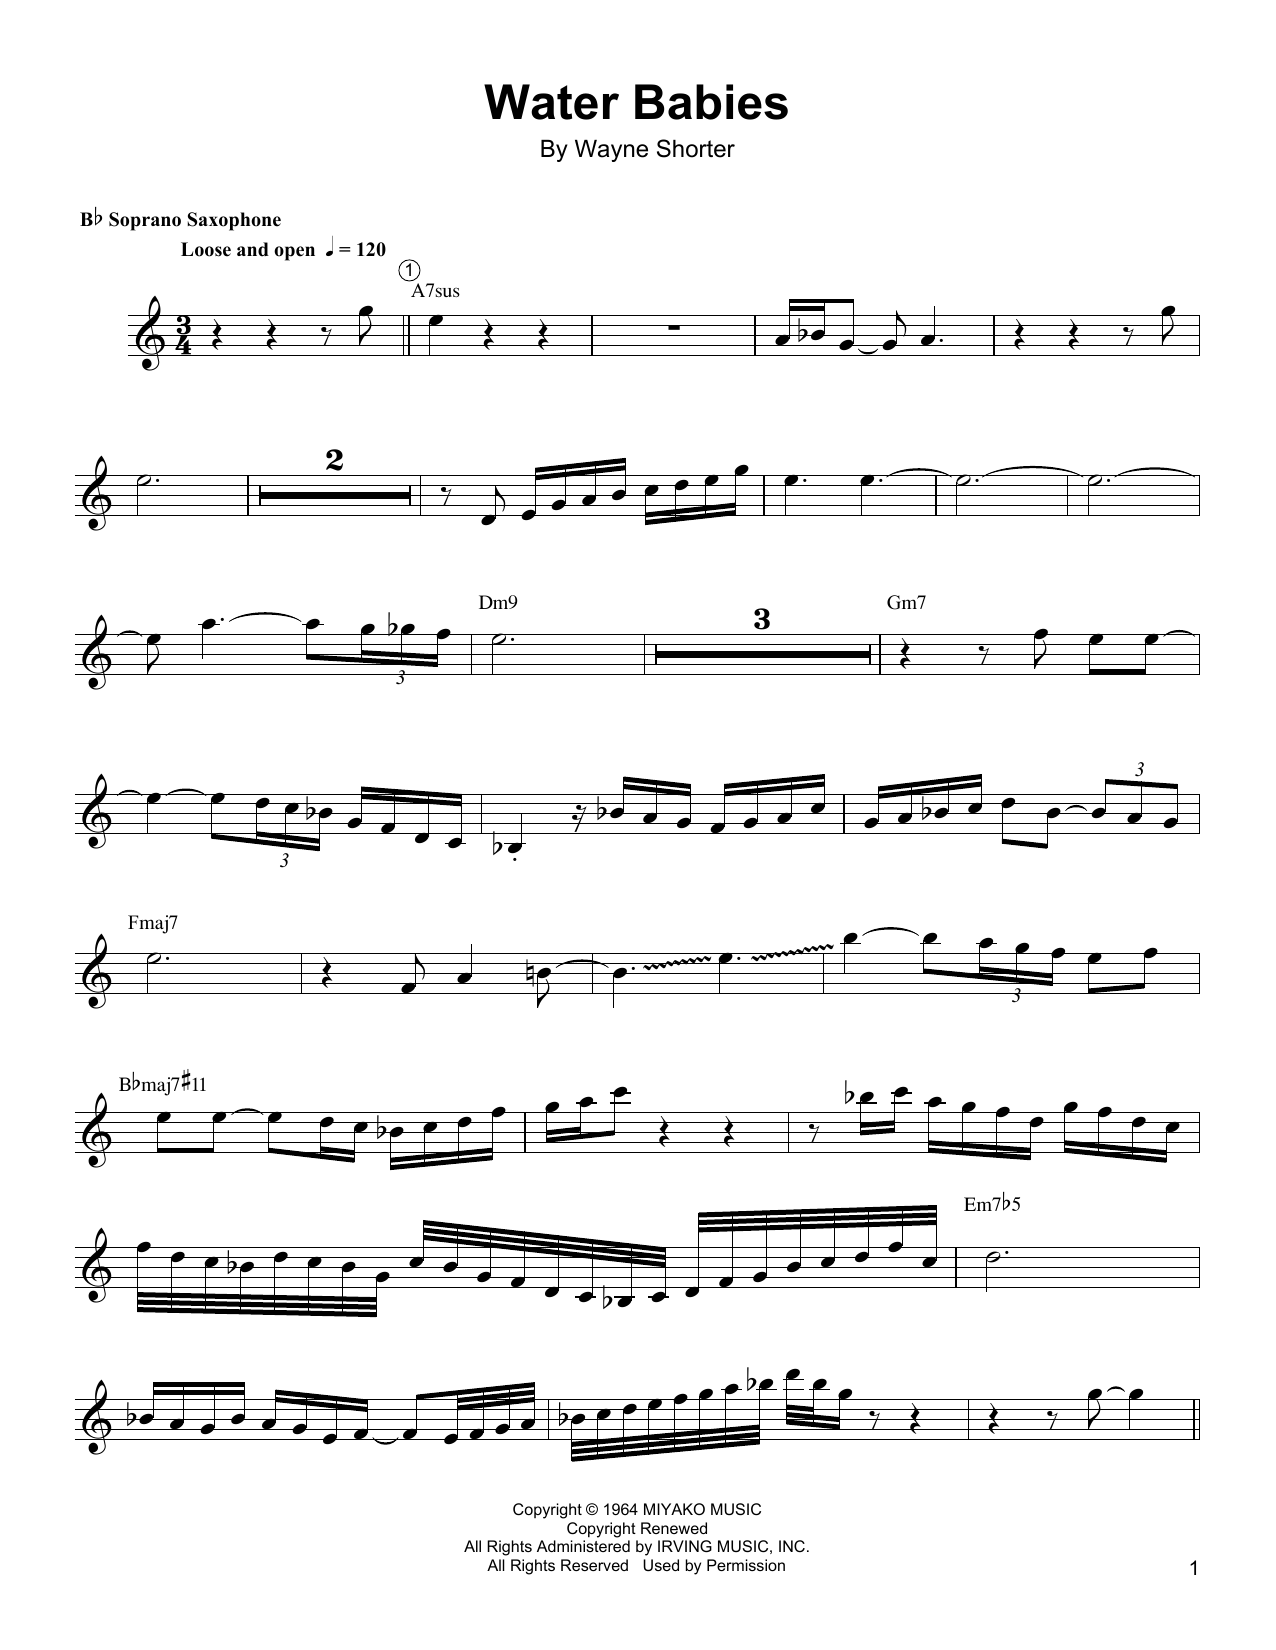 Wayne Shorter Water Babies Sheet Music Notes & Chords for Soprano Sax Transcription - Download or Print PDF